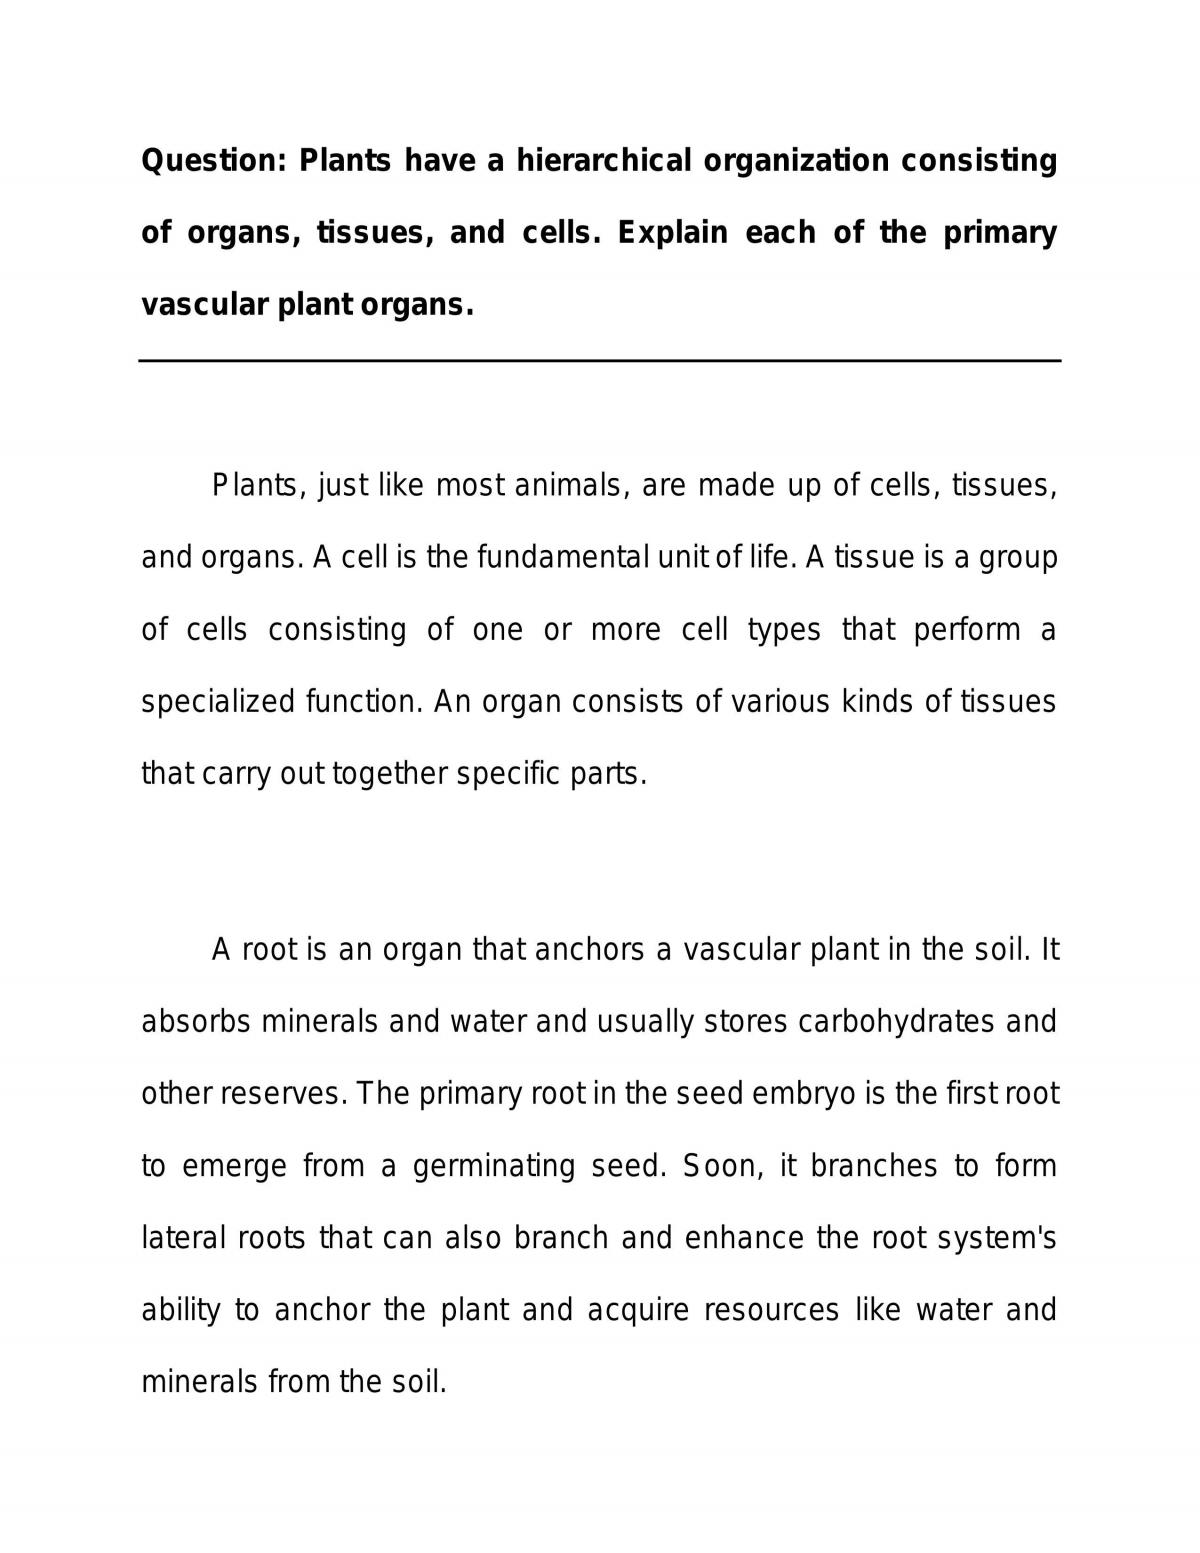 Essay Discussing the Types of Primary Vascular Plant Organs | Biology -  STPM | Thinkswap